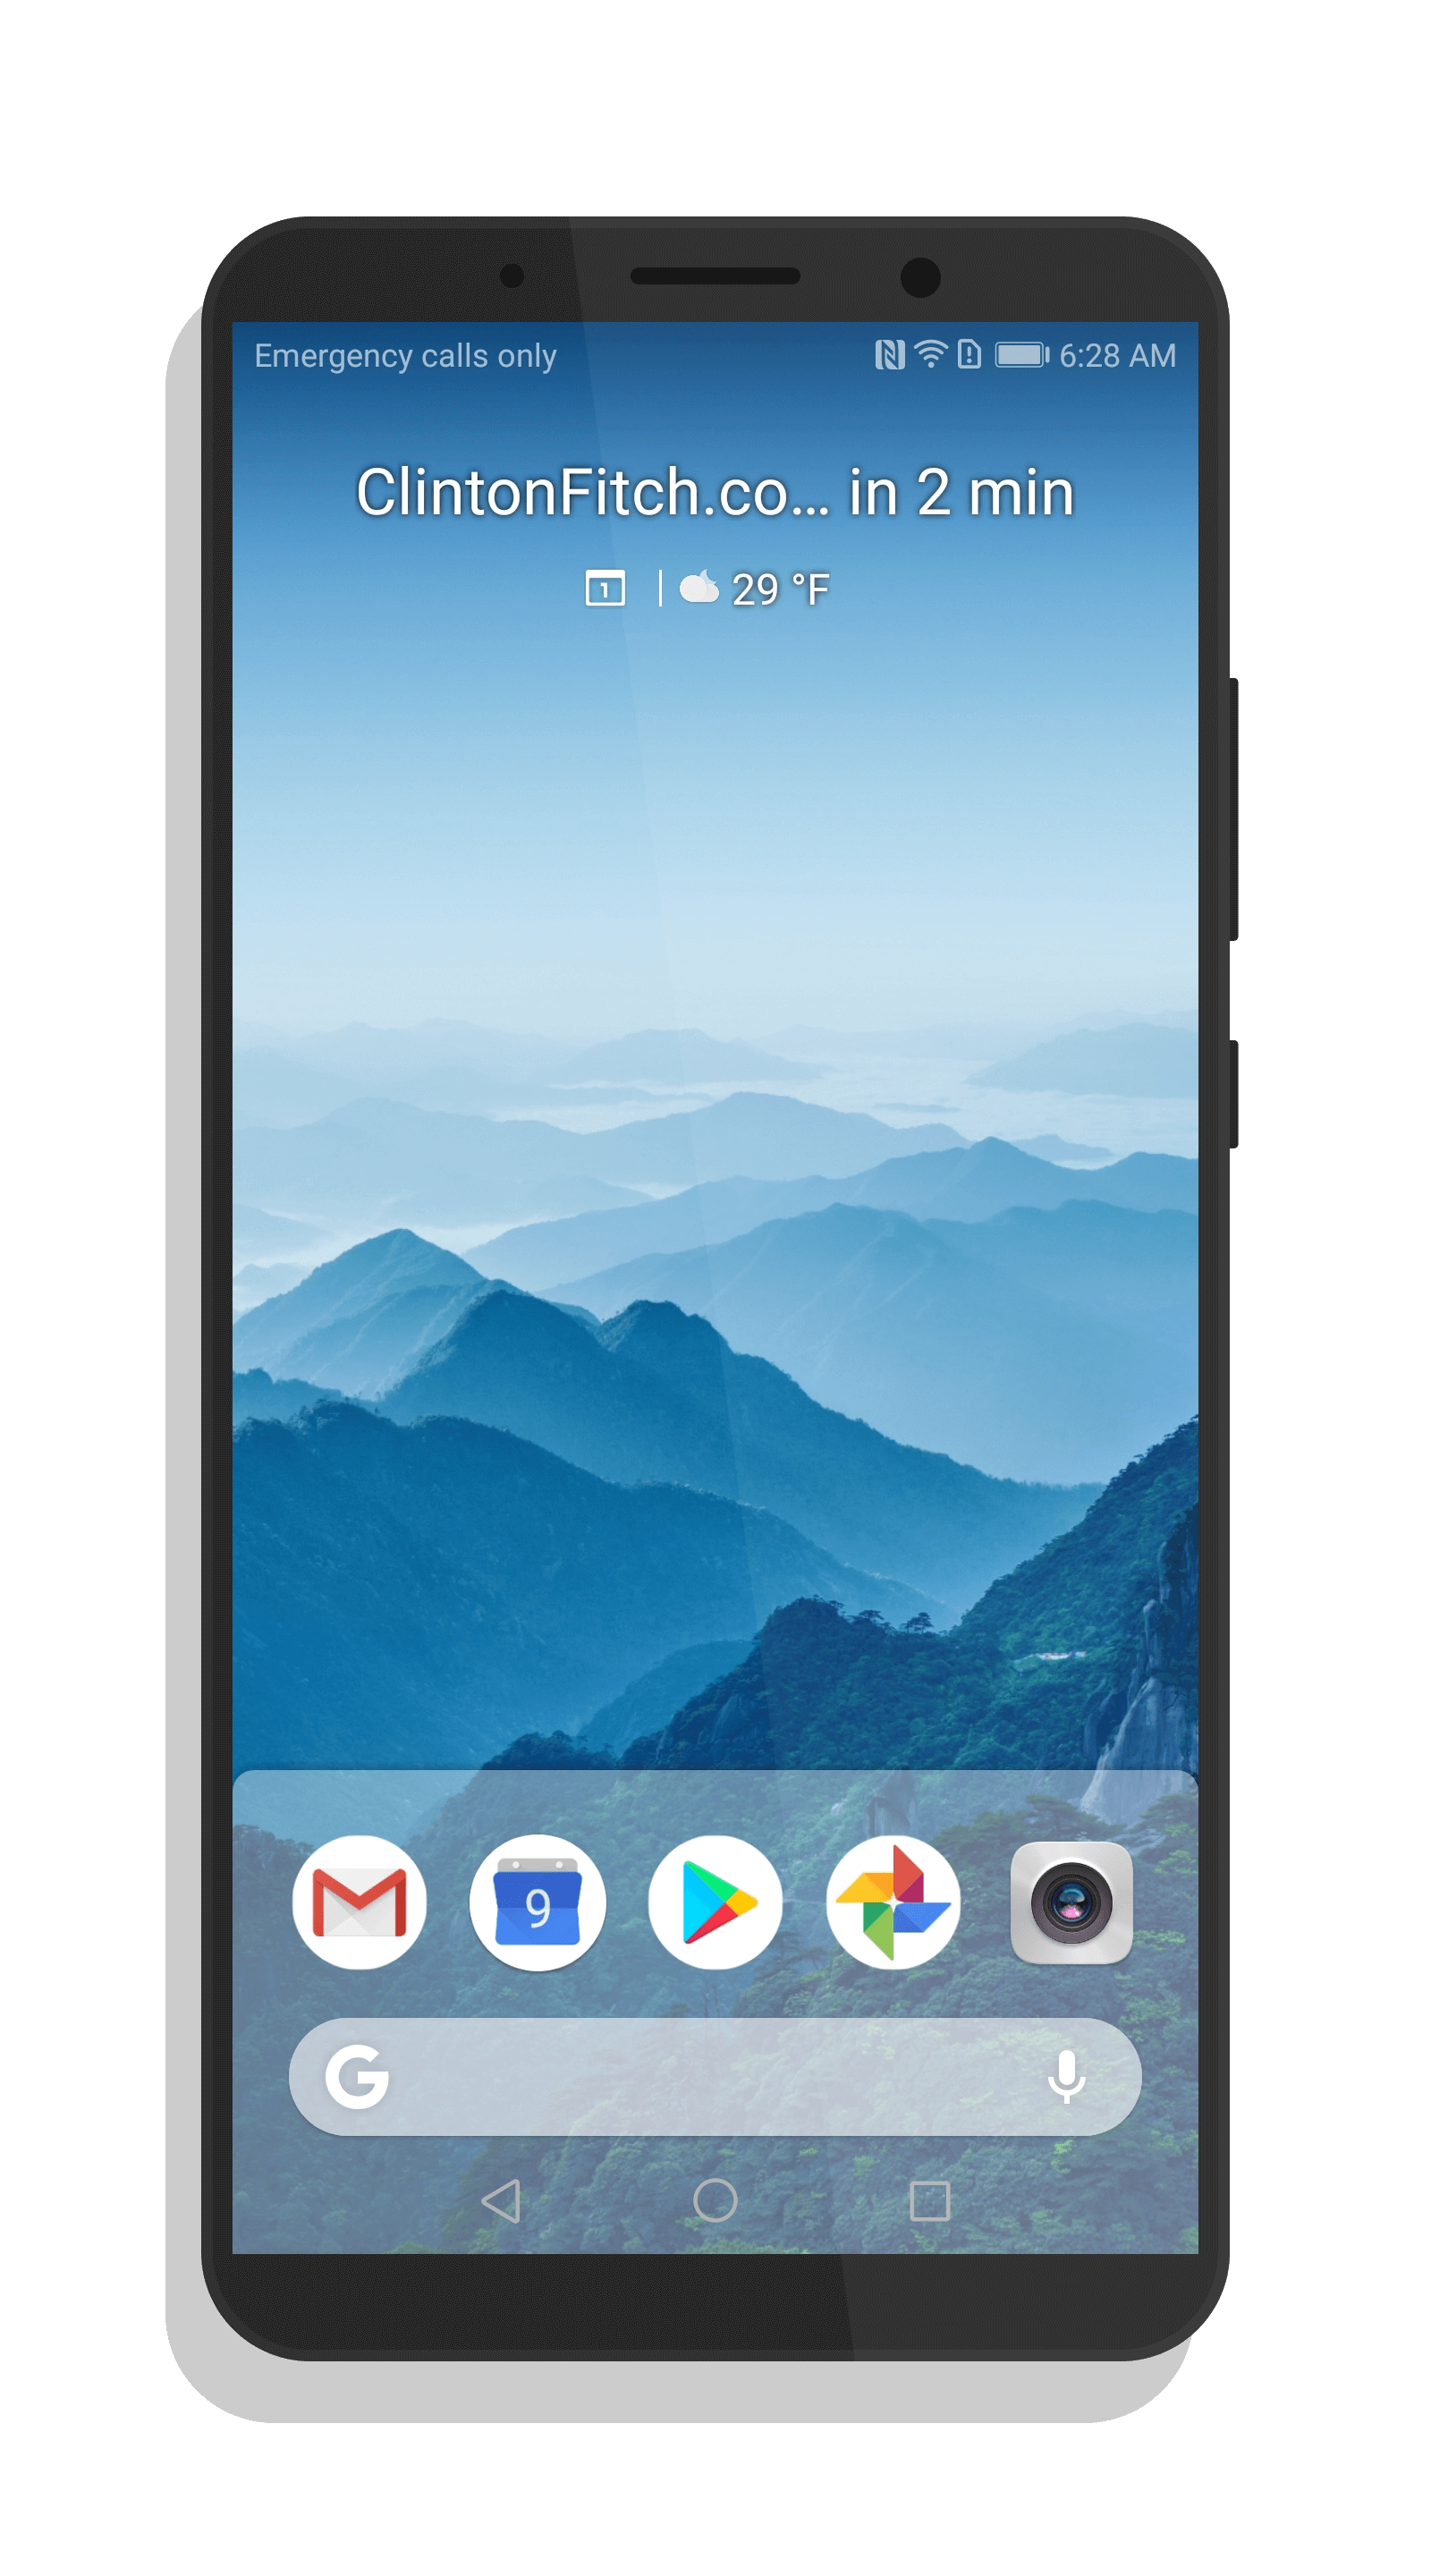 Android P Pixel Launcher Update